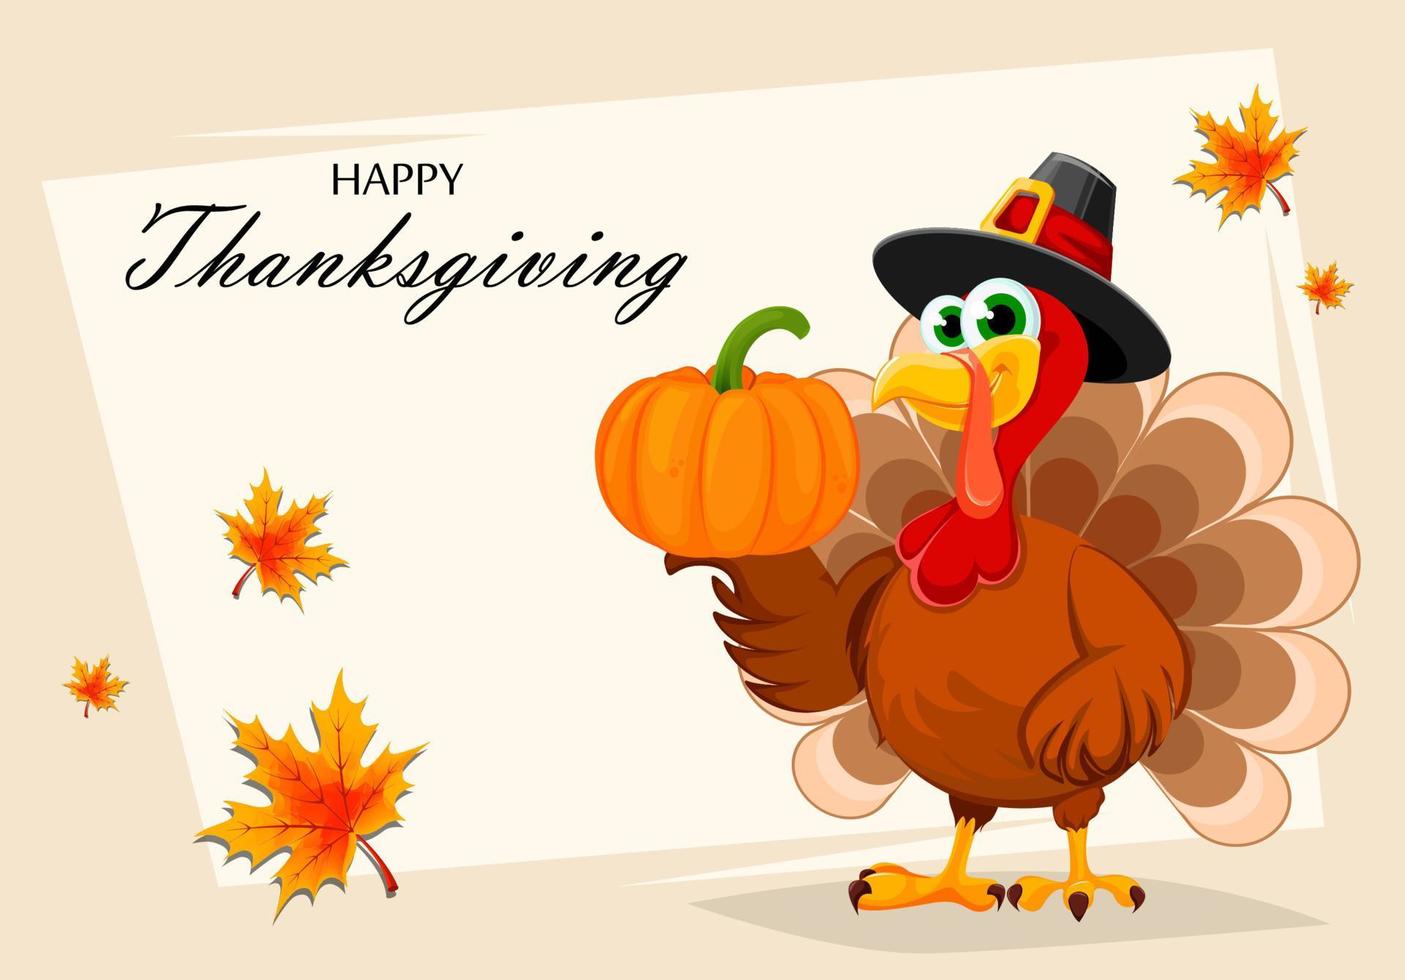 Happy Thanksgiving. Thanksgiving turkey vector